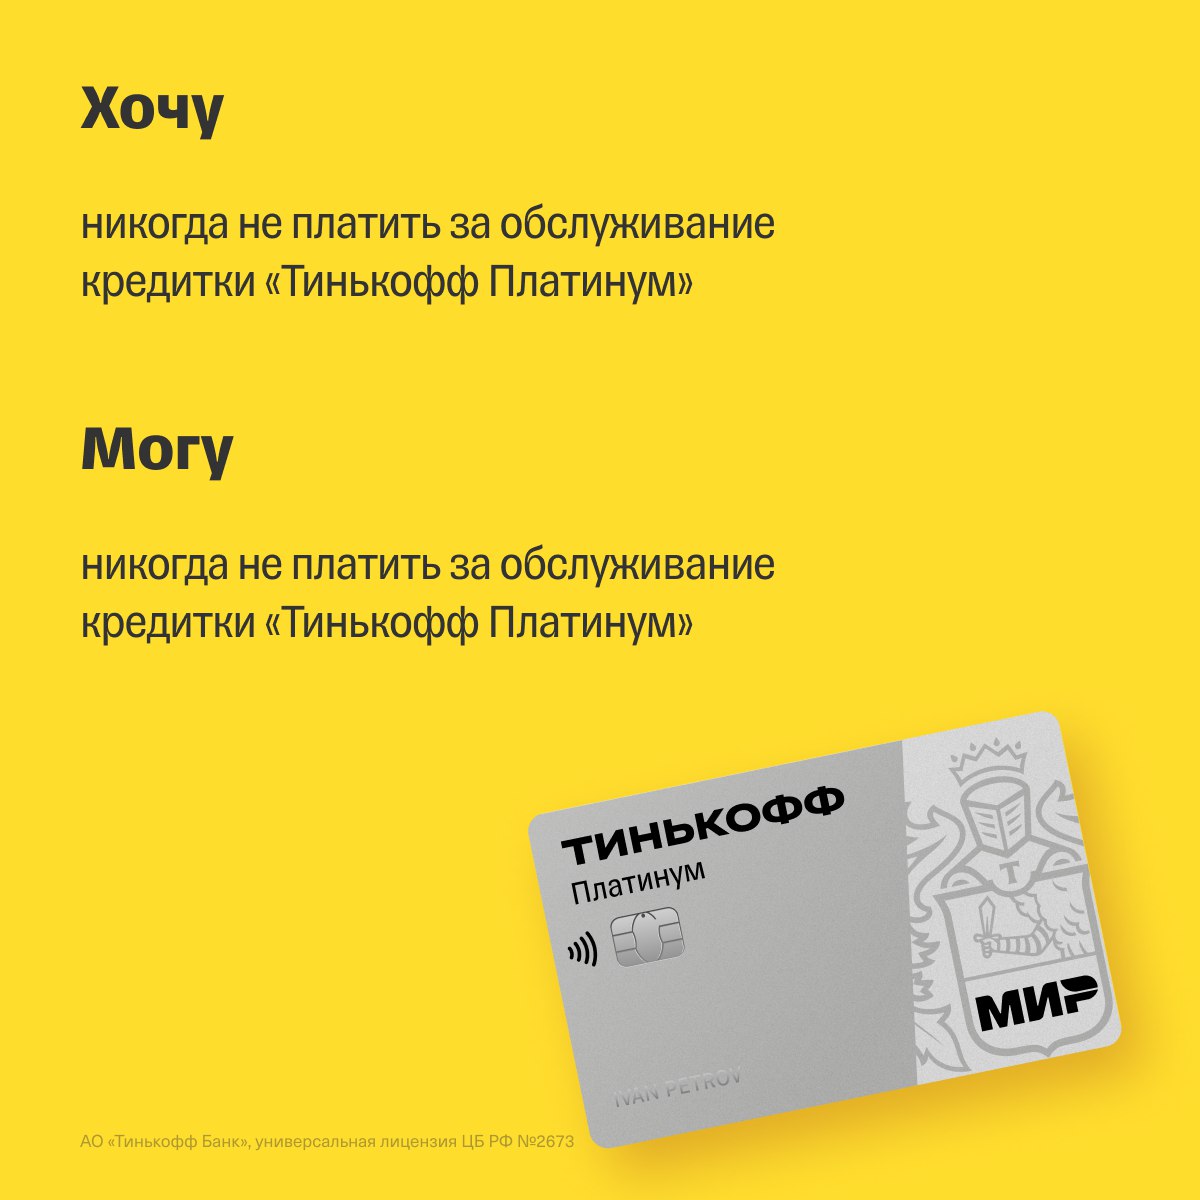 Тинькофф платинум кредитная карта условия и проценты. Тинькофф платинум вместо бонусов рубли.